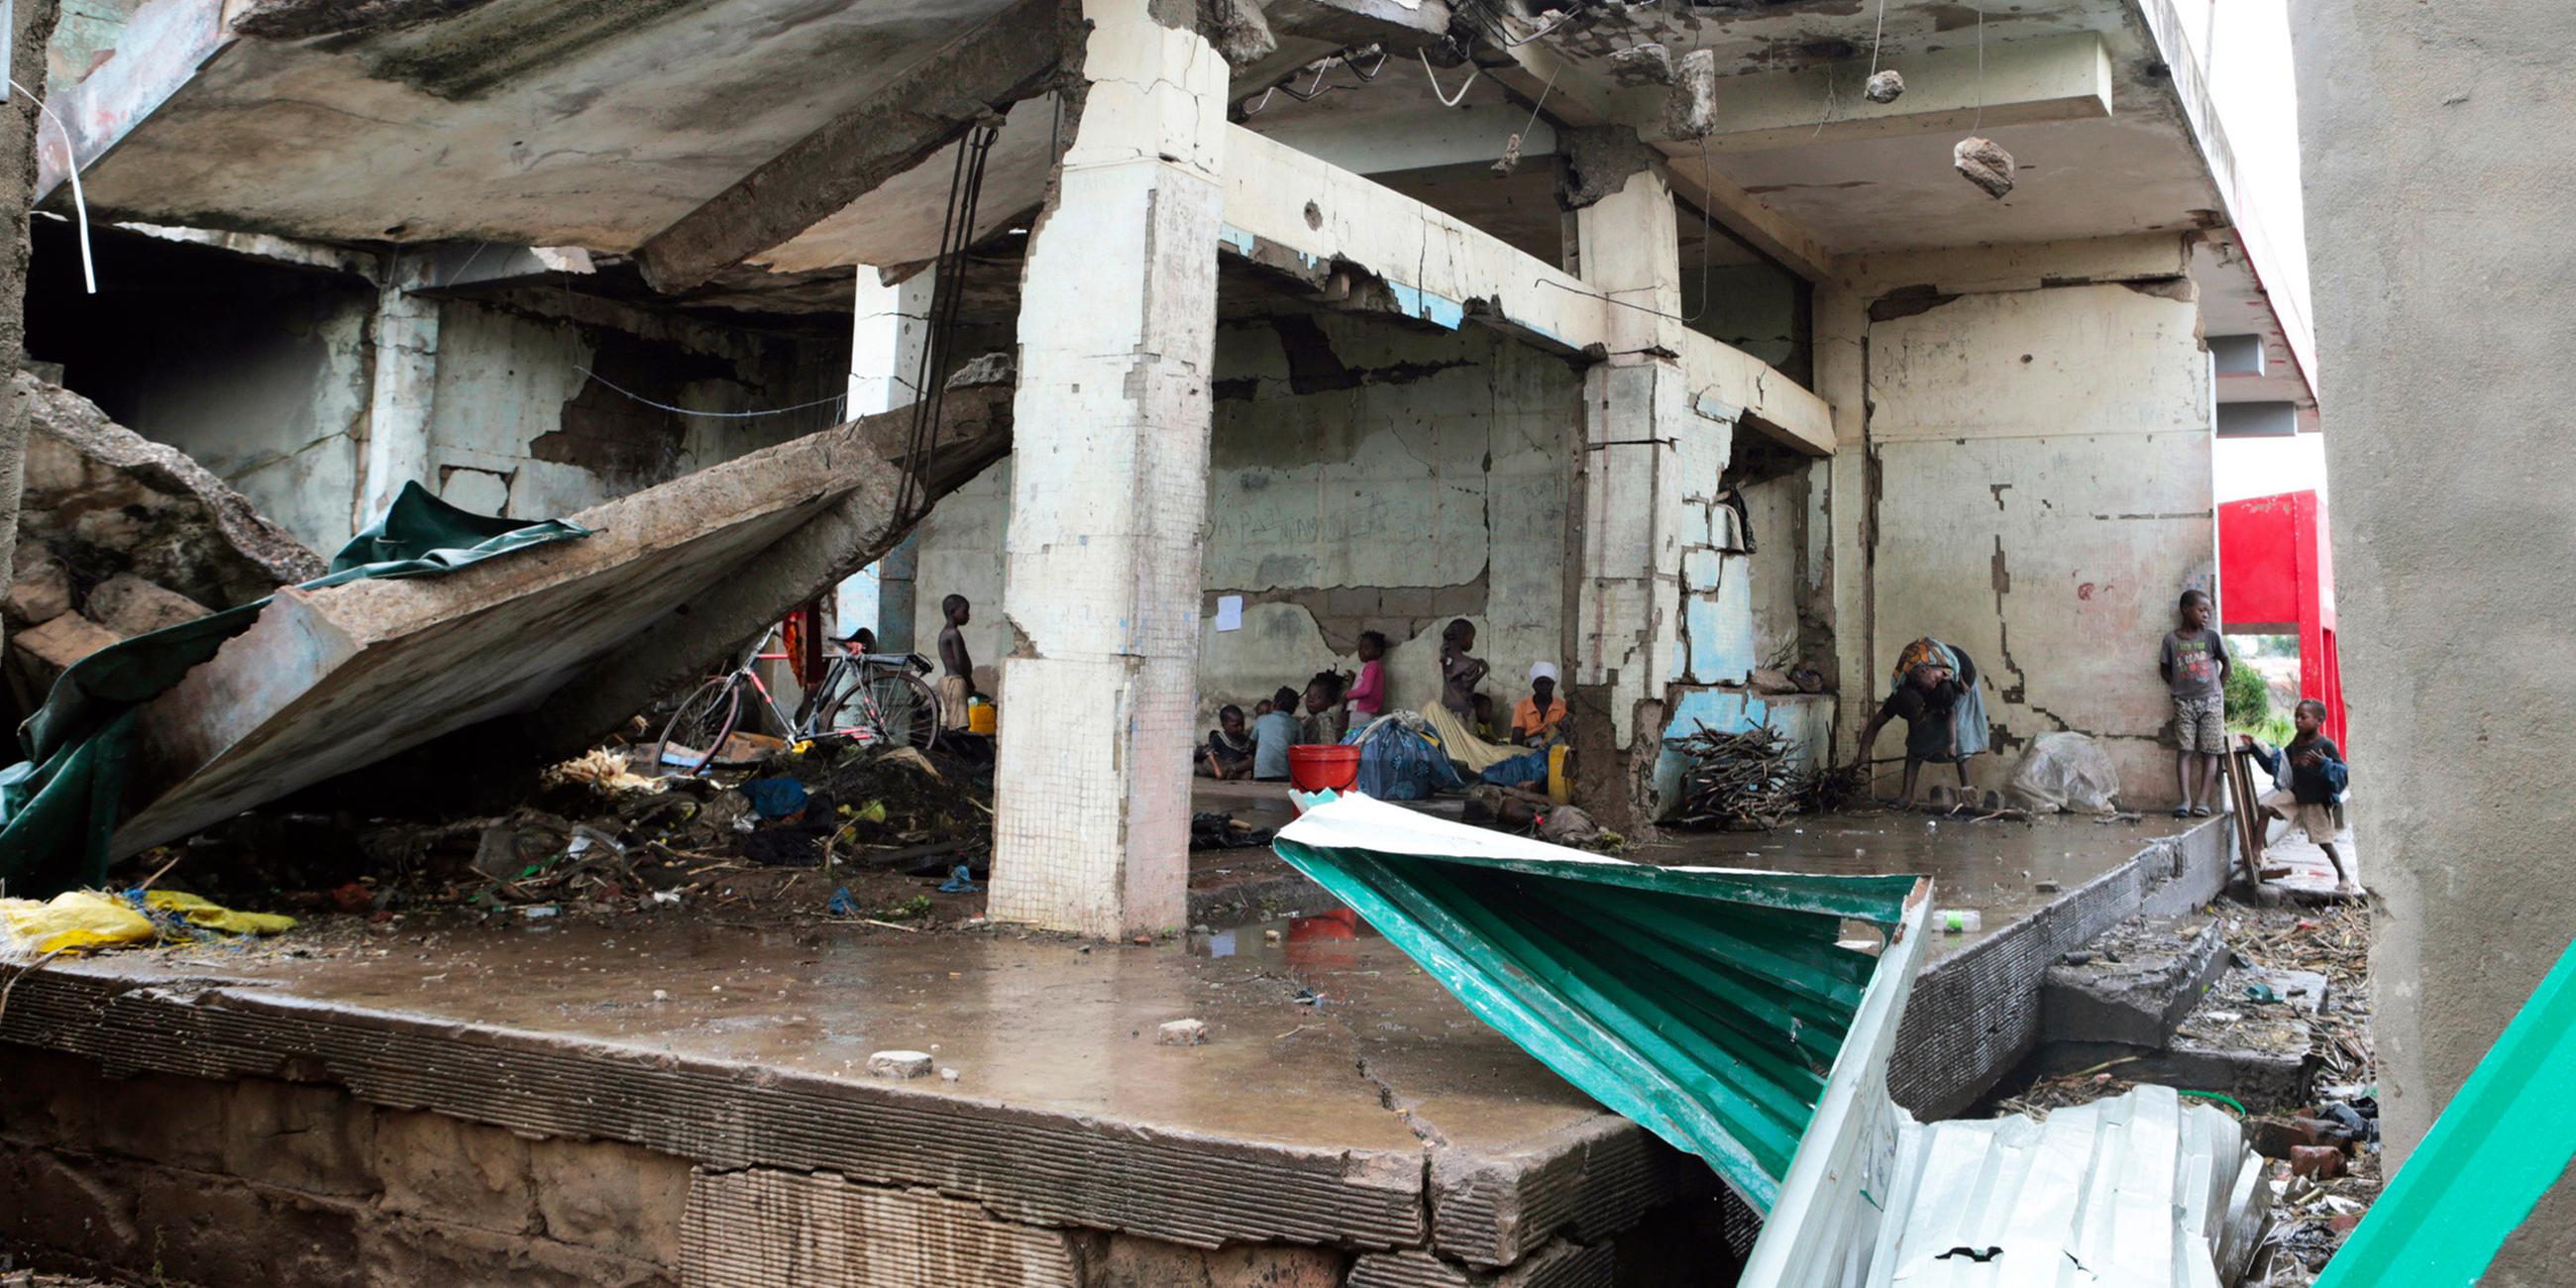 Zerstörungen durch den Wirbelsturm "Idai" in Mosambik am 22.03.2019